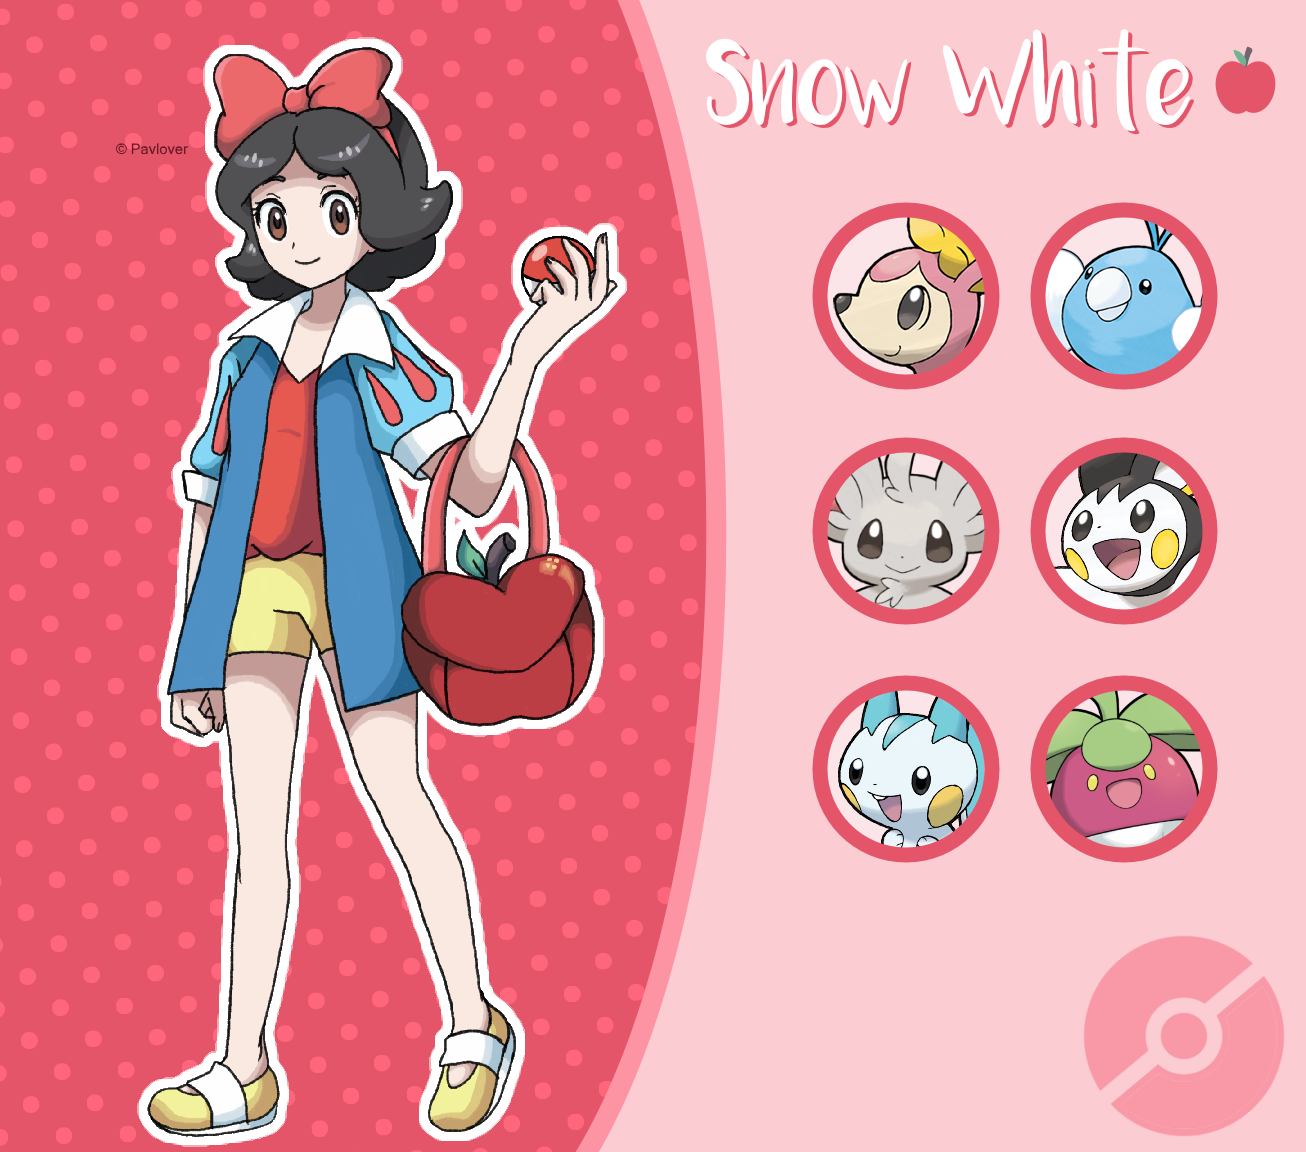 Disney Pokemon trainer : Snow White by Pavlover